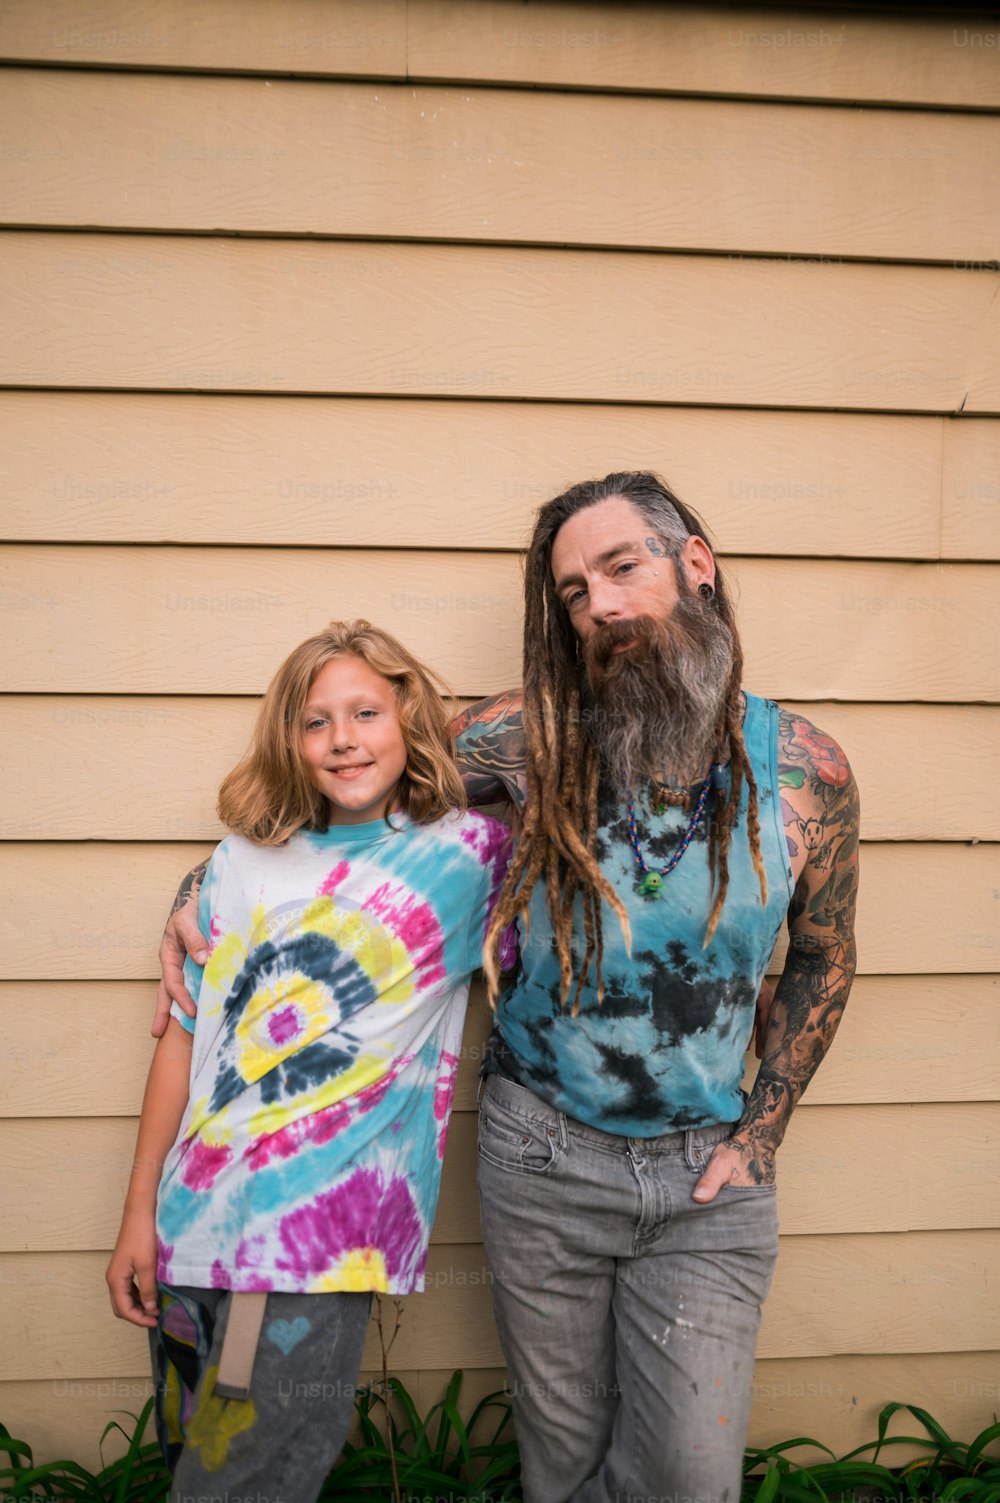 a man with a long beard standing next to a little girl